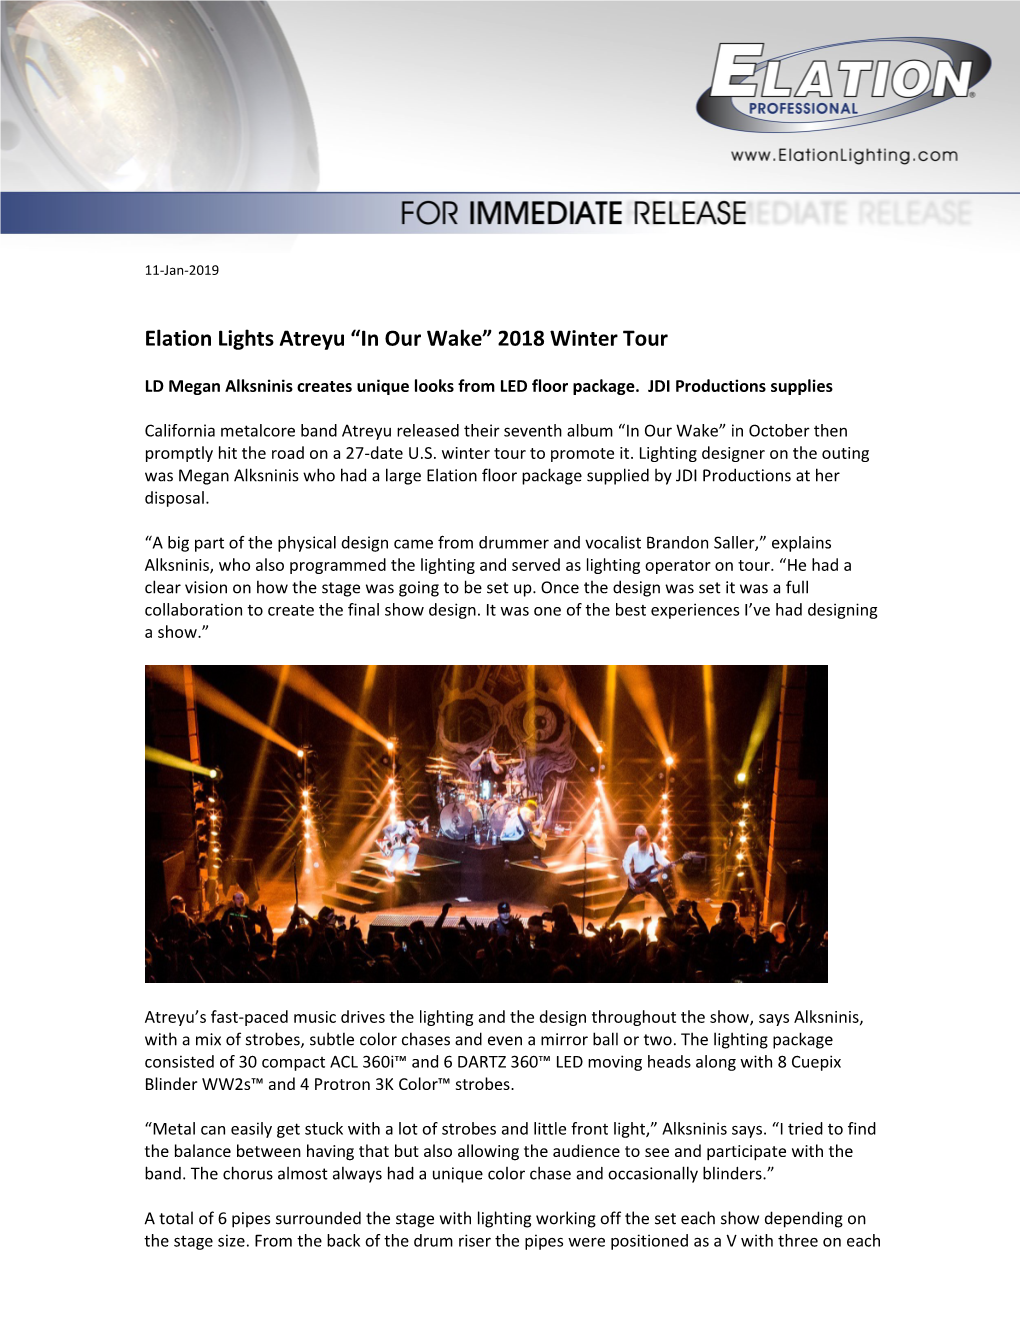 Elation Lights Atreyu “In Our Wake” 2018 Winter Tour